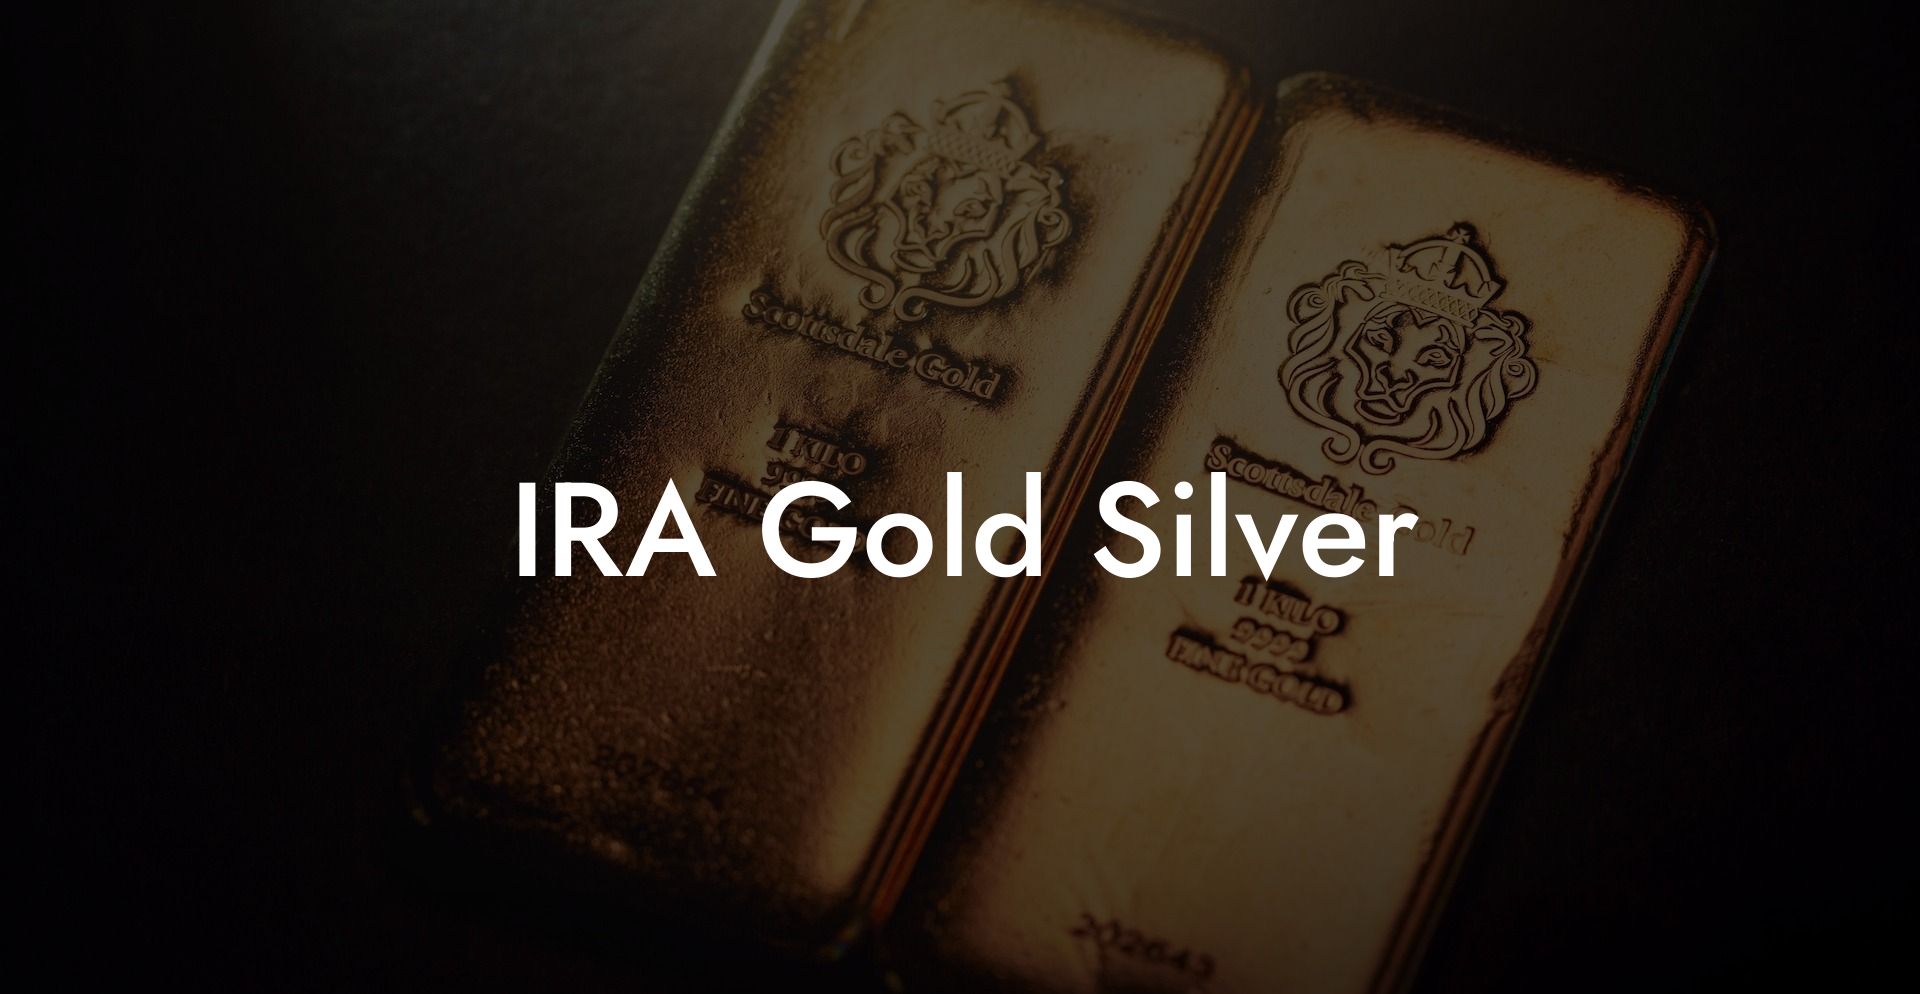 IRA Gold Silver